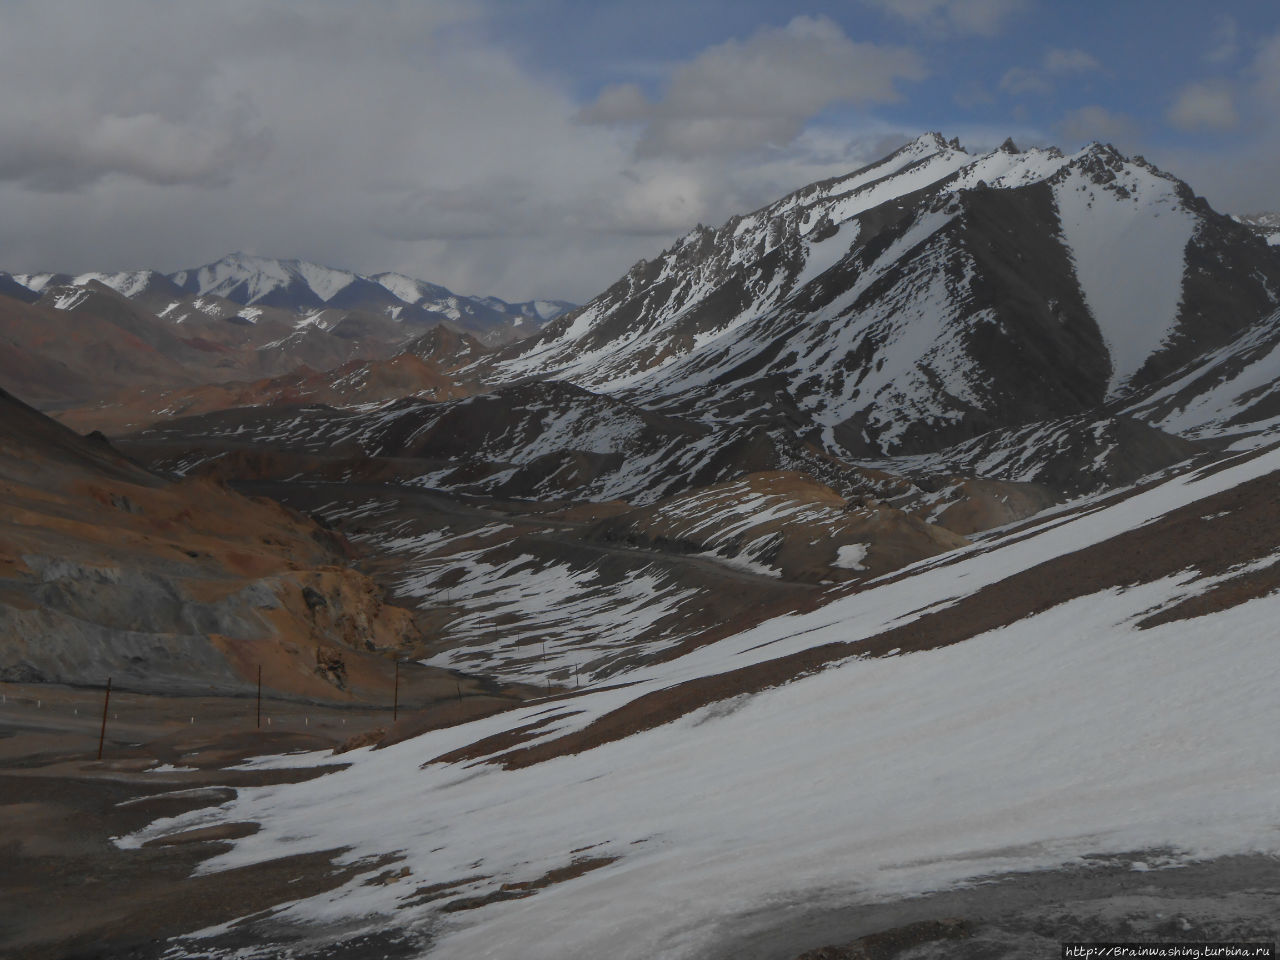 Пер. Акбайтал (4655 м) Горно-Бадахшанская область, Таджикистан